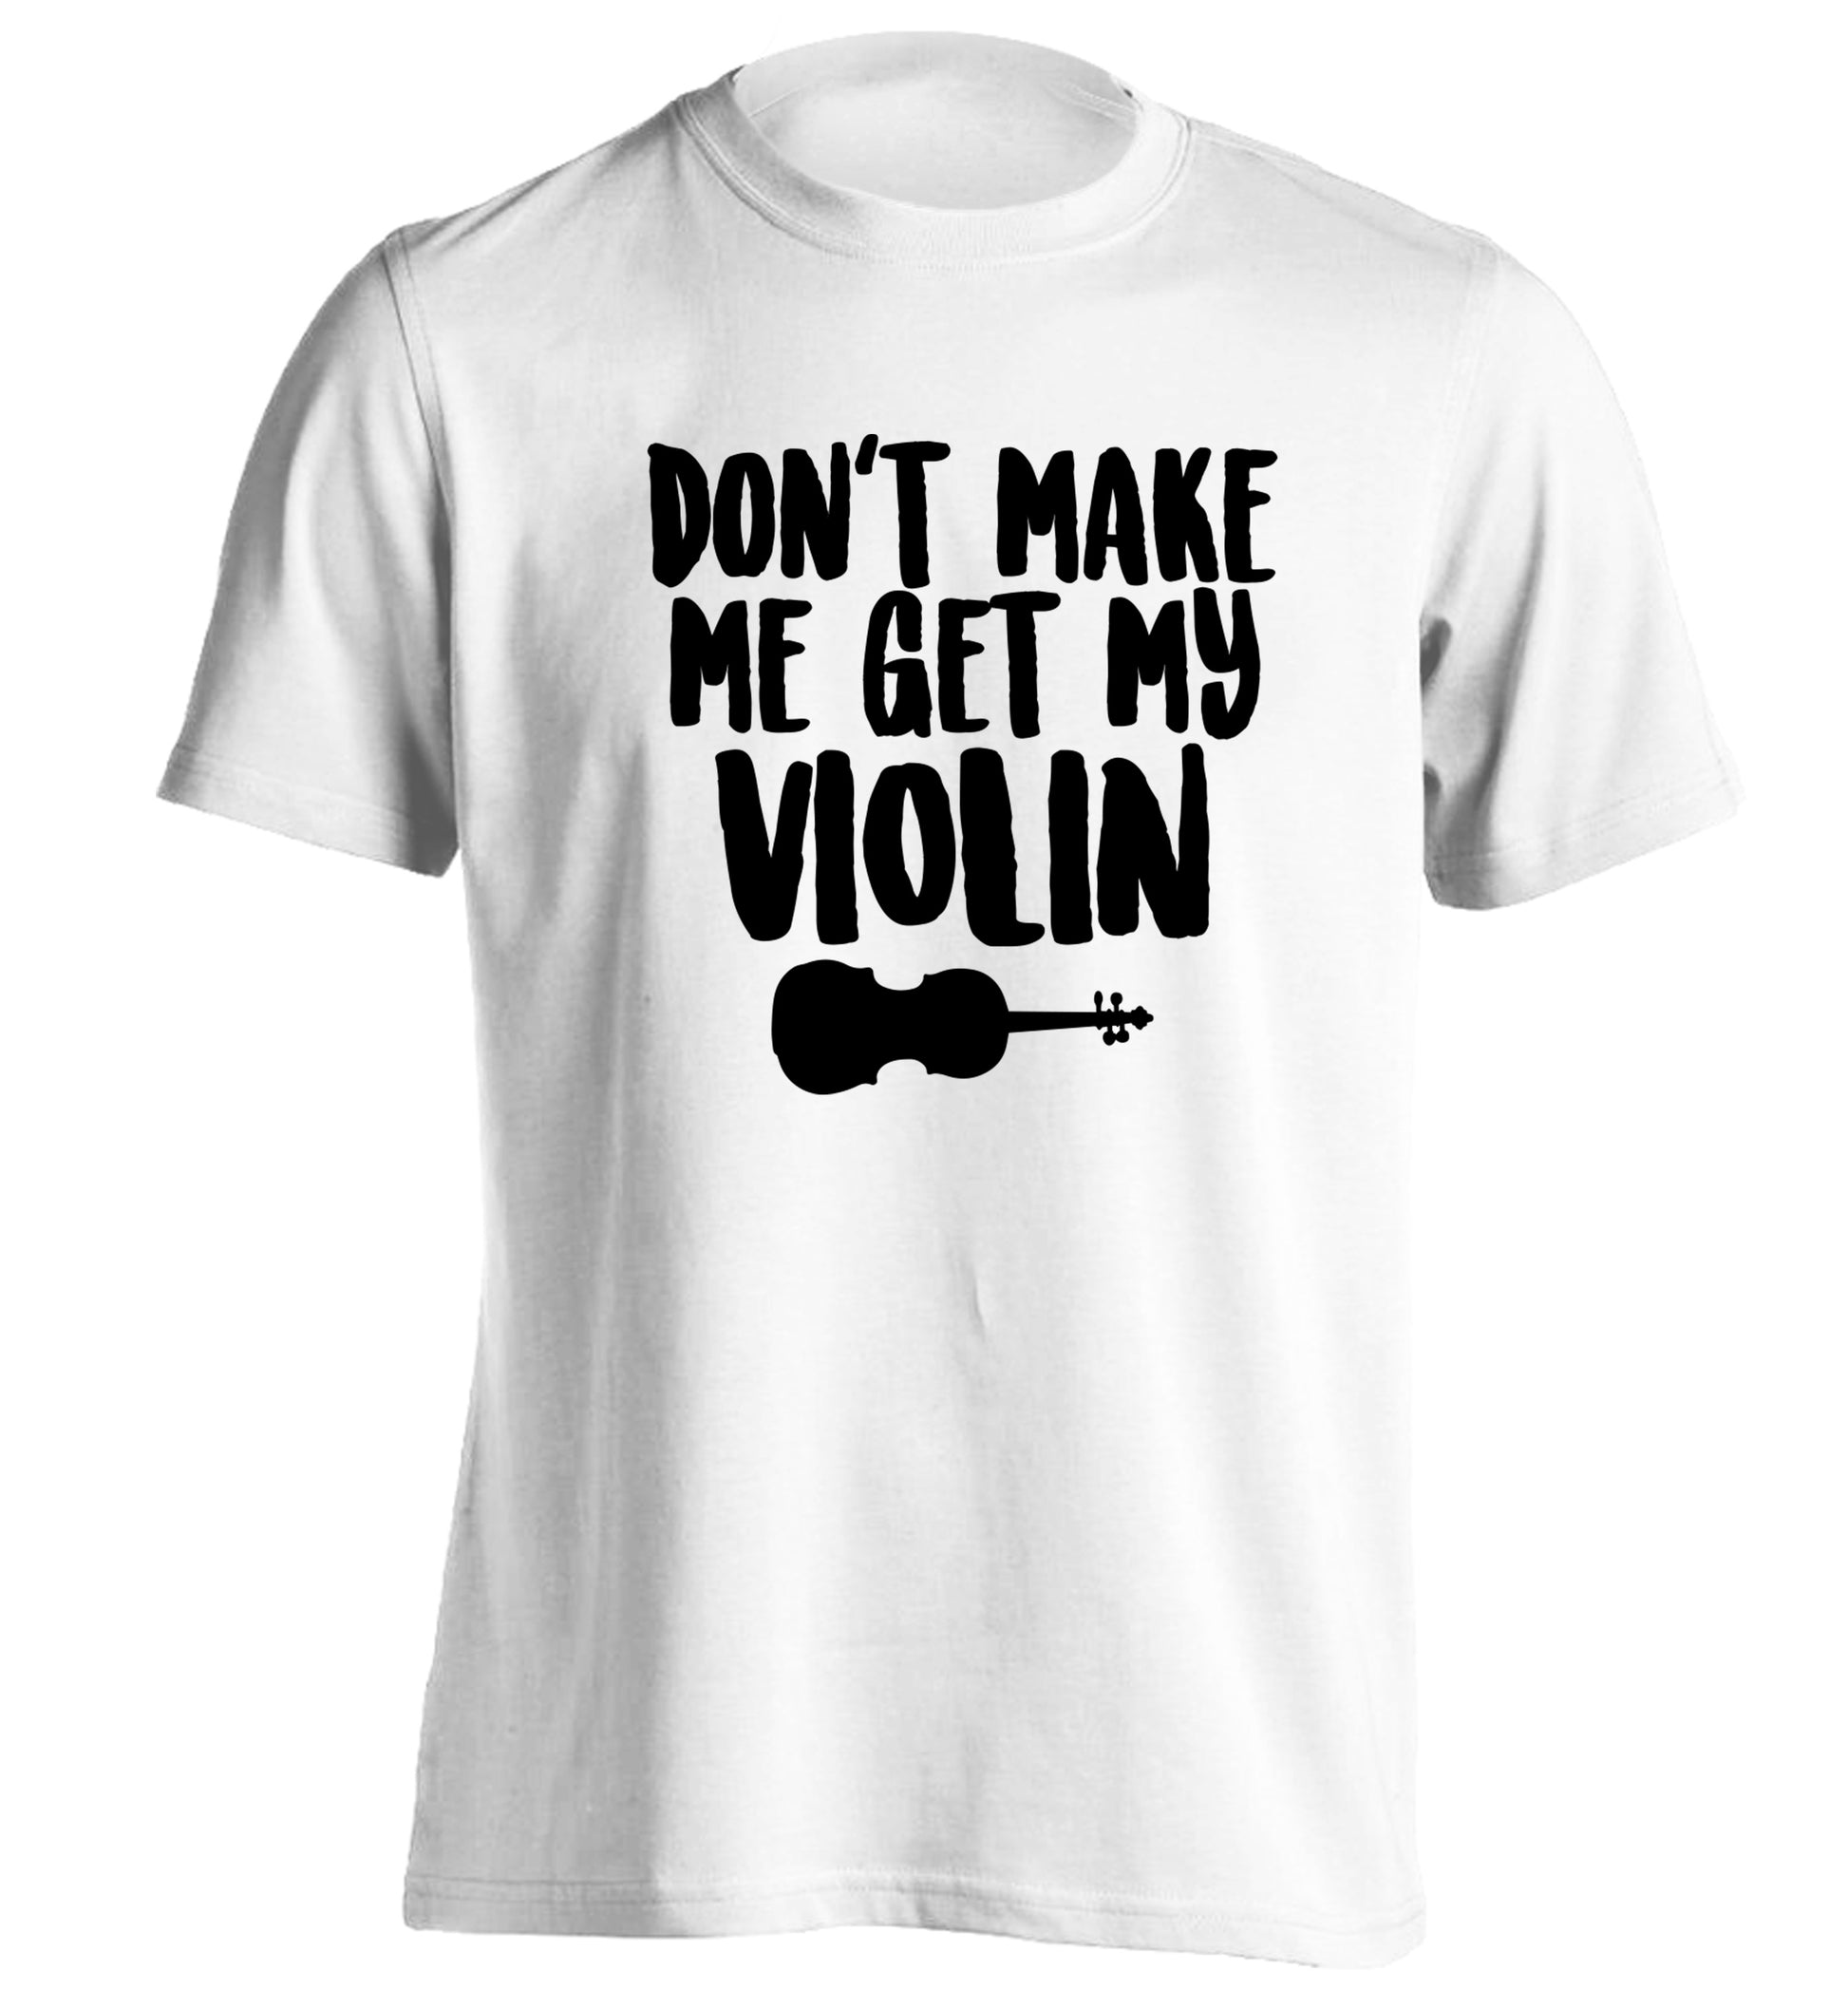 Don't make me get my violin adults unisex white Tshirt 2XL